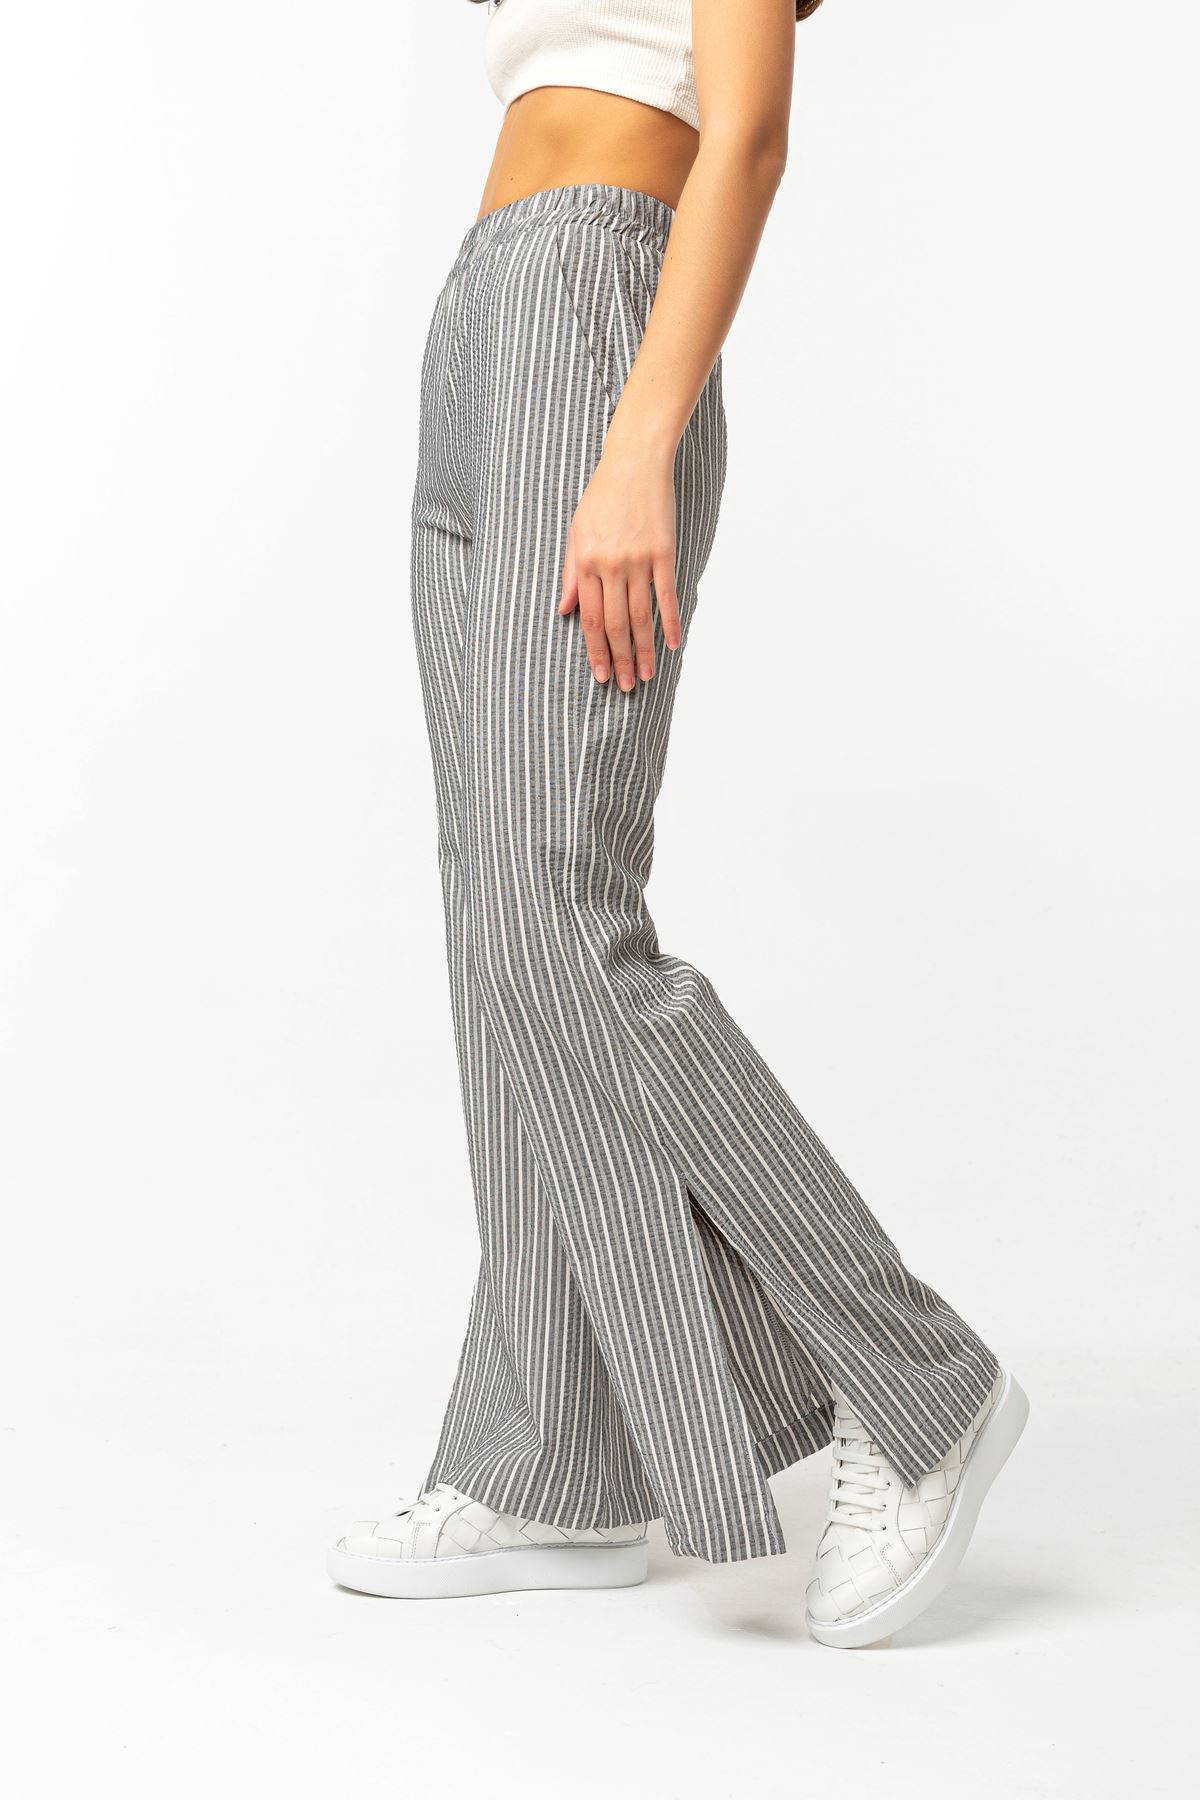 Gofre Fabric Long Striped Slit Women'S Trouser - Black